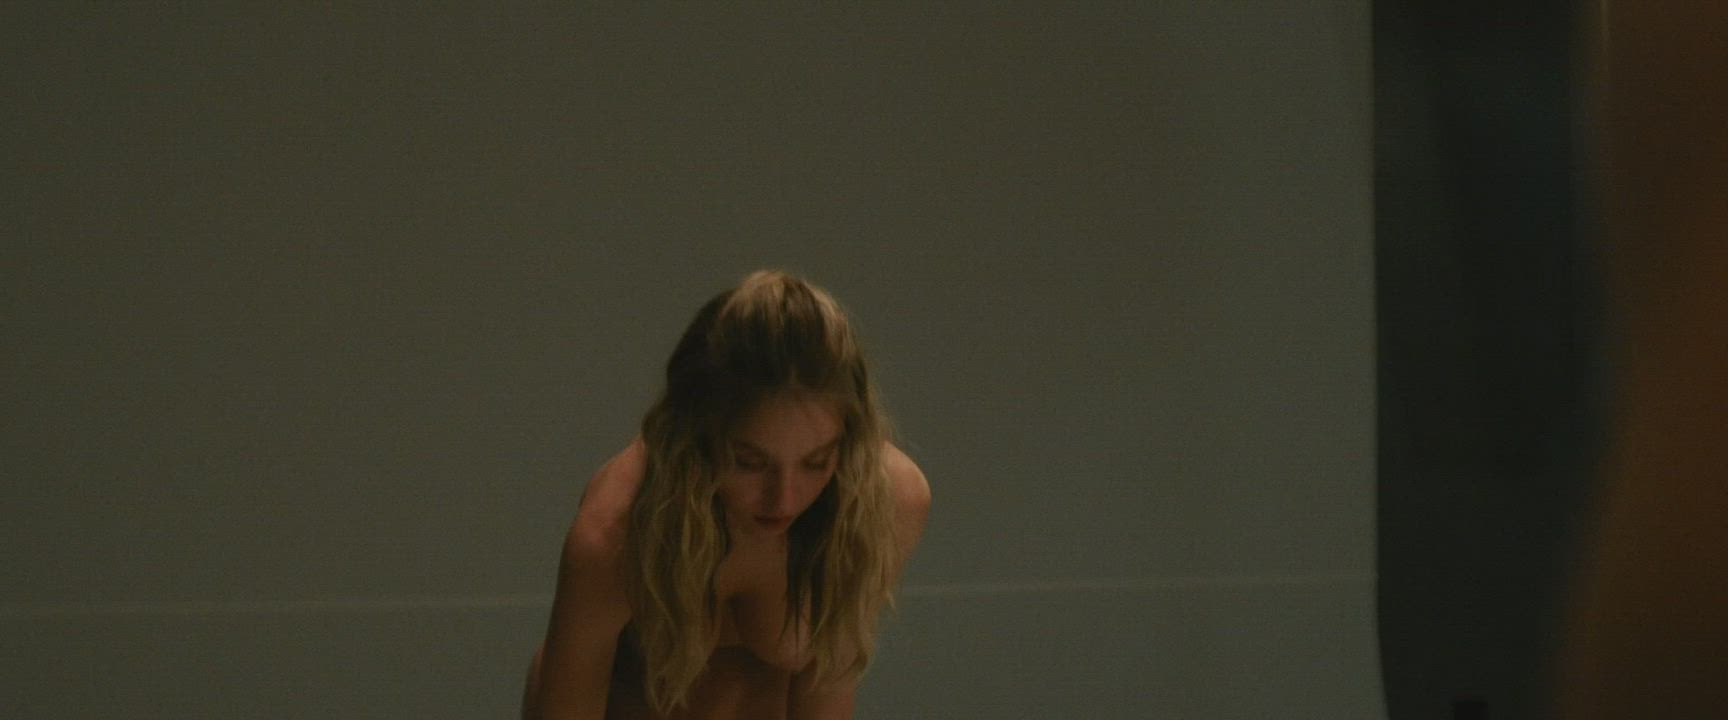 Sydney Sweeney nude in her new movie